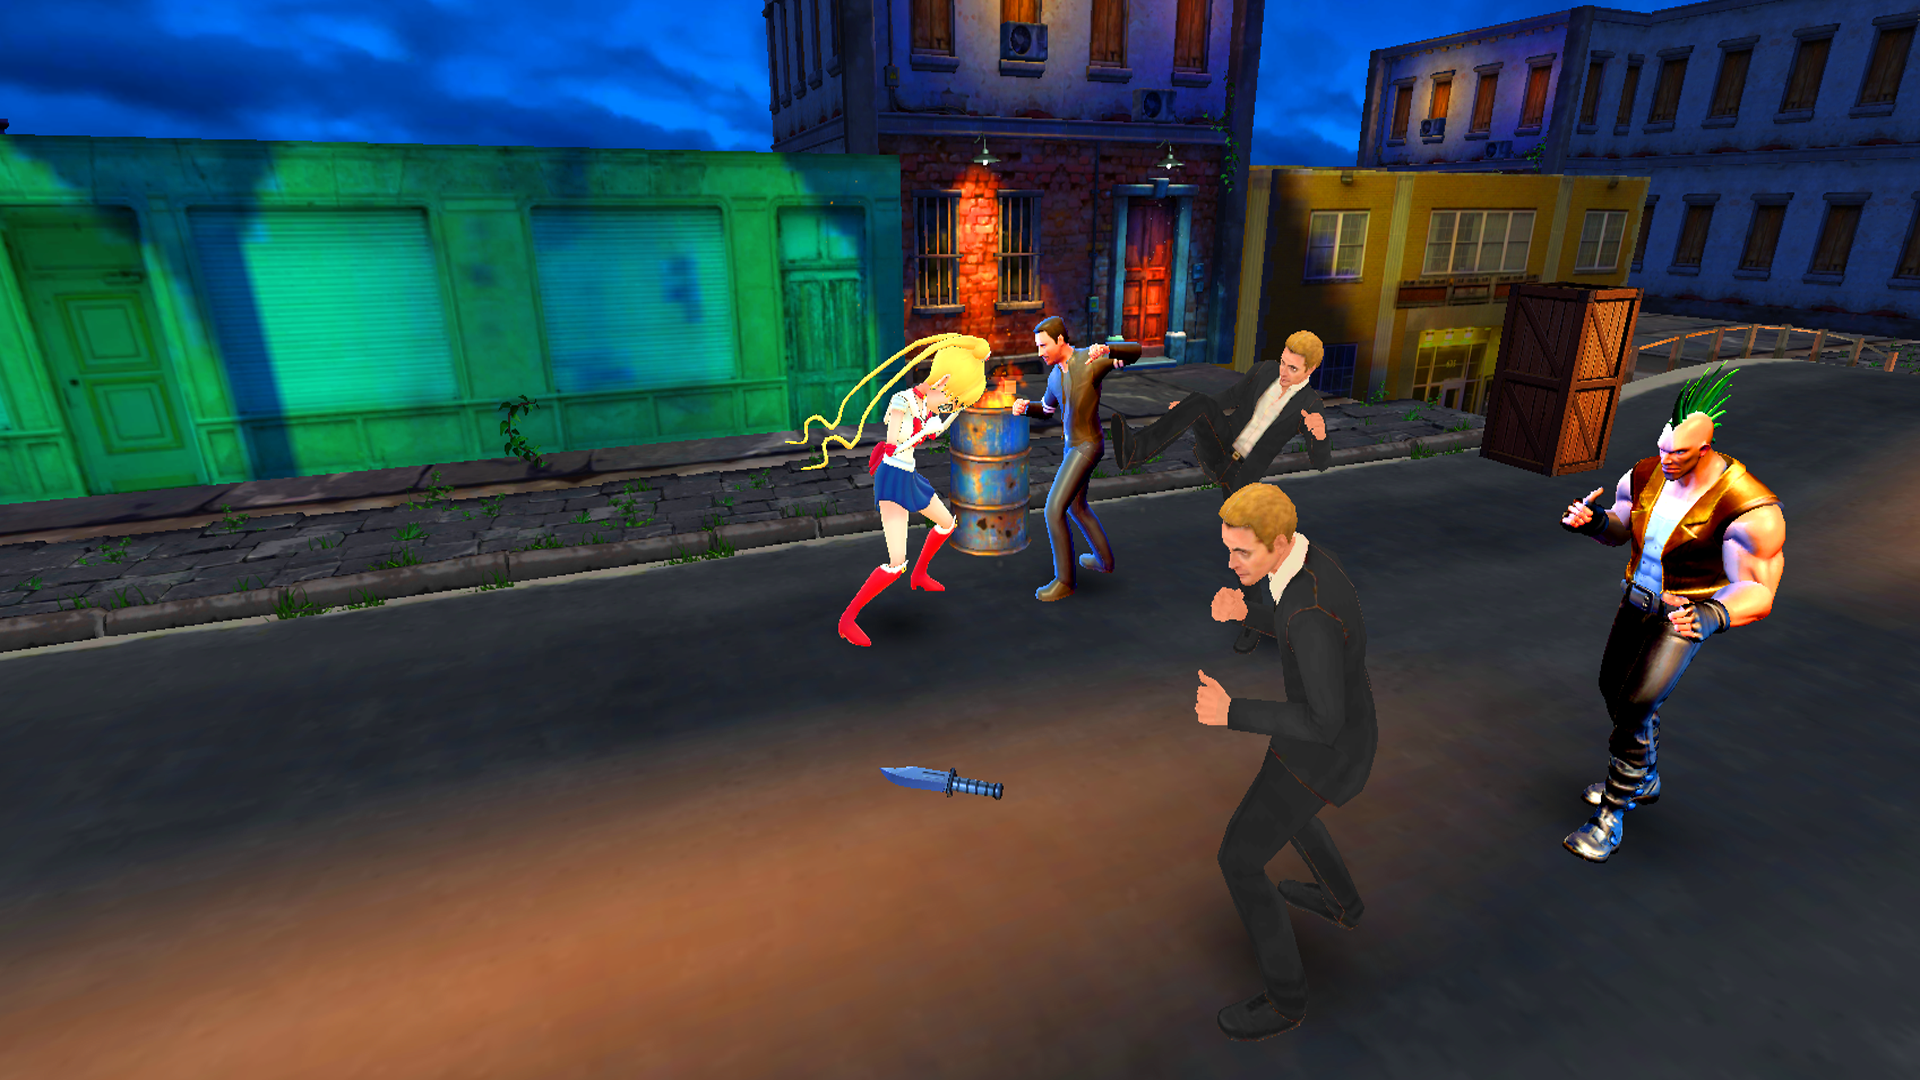 Screenshot of Sailor Moon Fighting Game